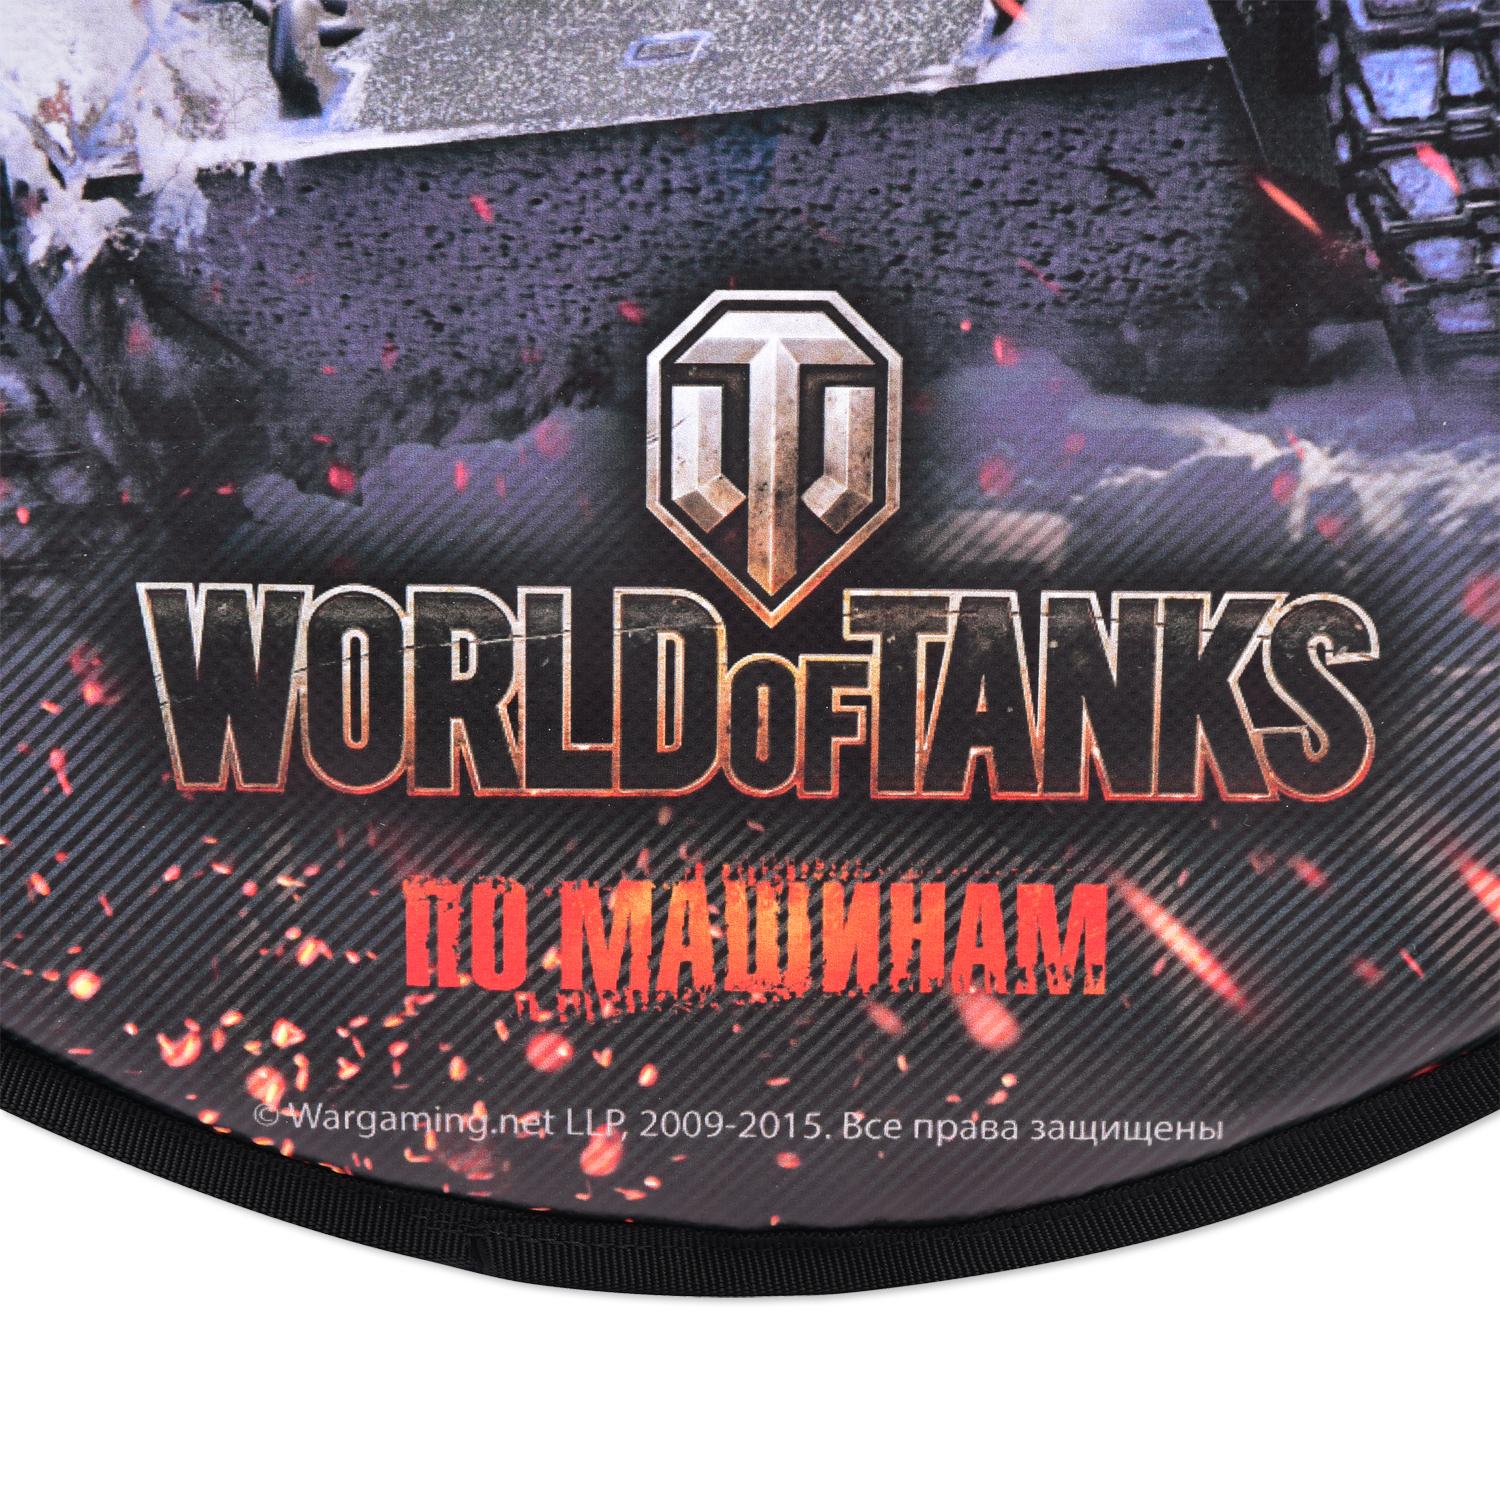 Круглая ледянка - World of Tanks, 52 см  